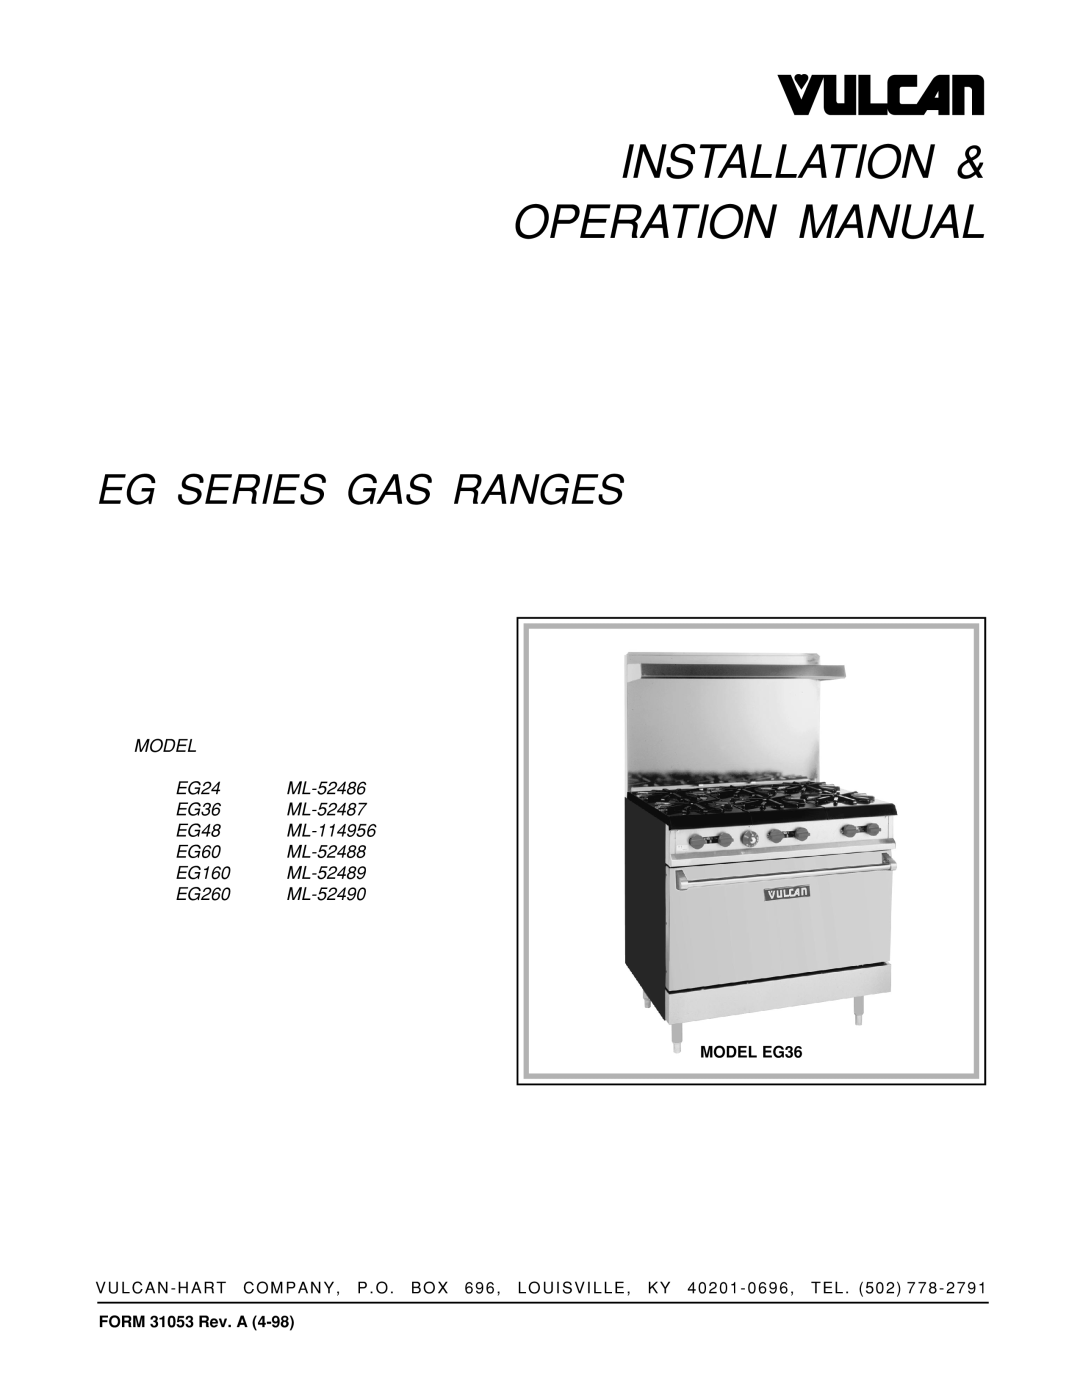 Vulcan-Hart EG48 ML-114956 operation manual Installation & Operation Manual, Eg Series Gas Ranges, MODEL EG36 